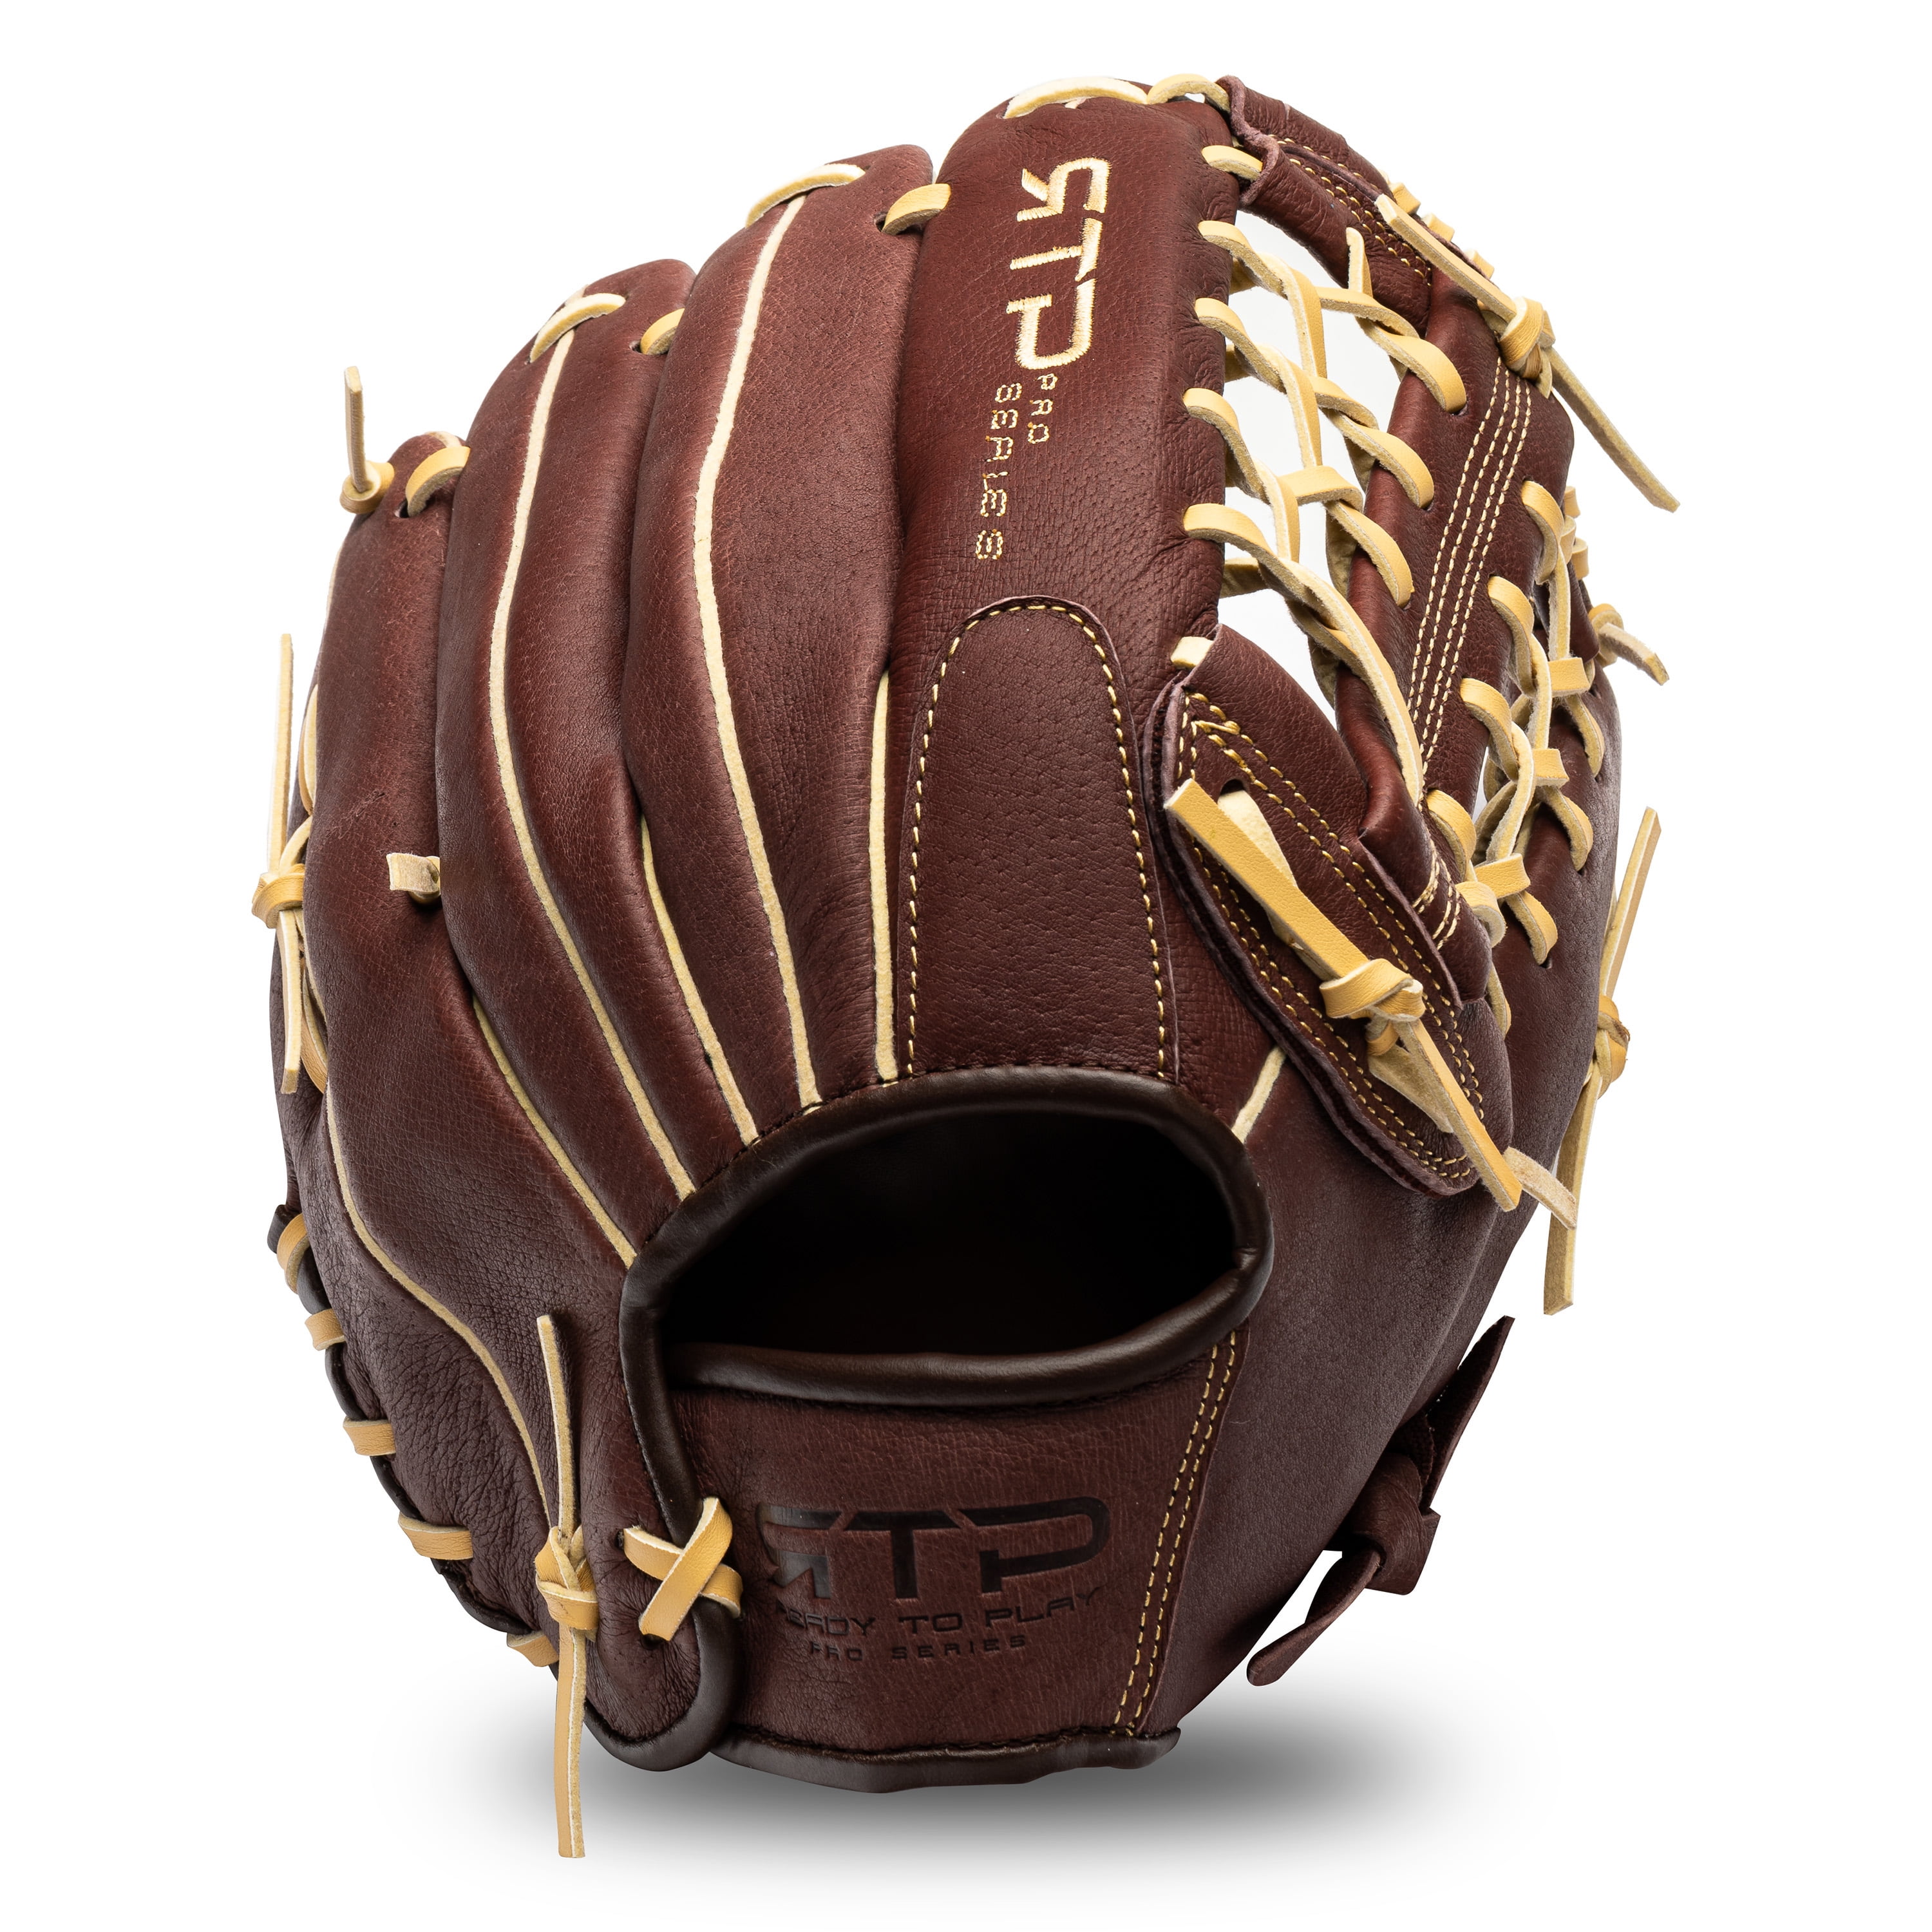 Rawlings PRO-12TC Baseball Glove for sale online 